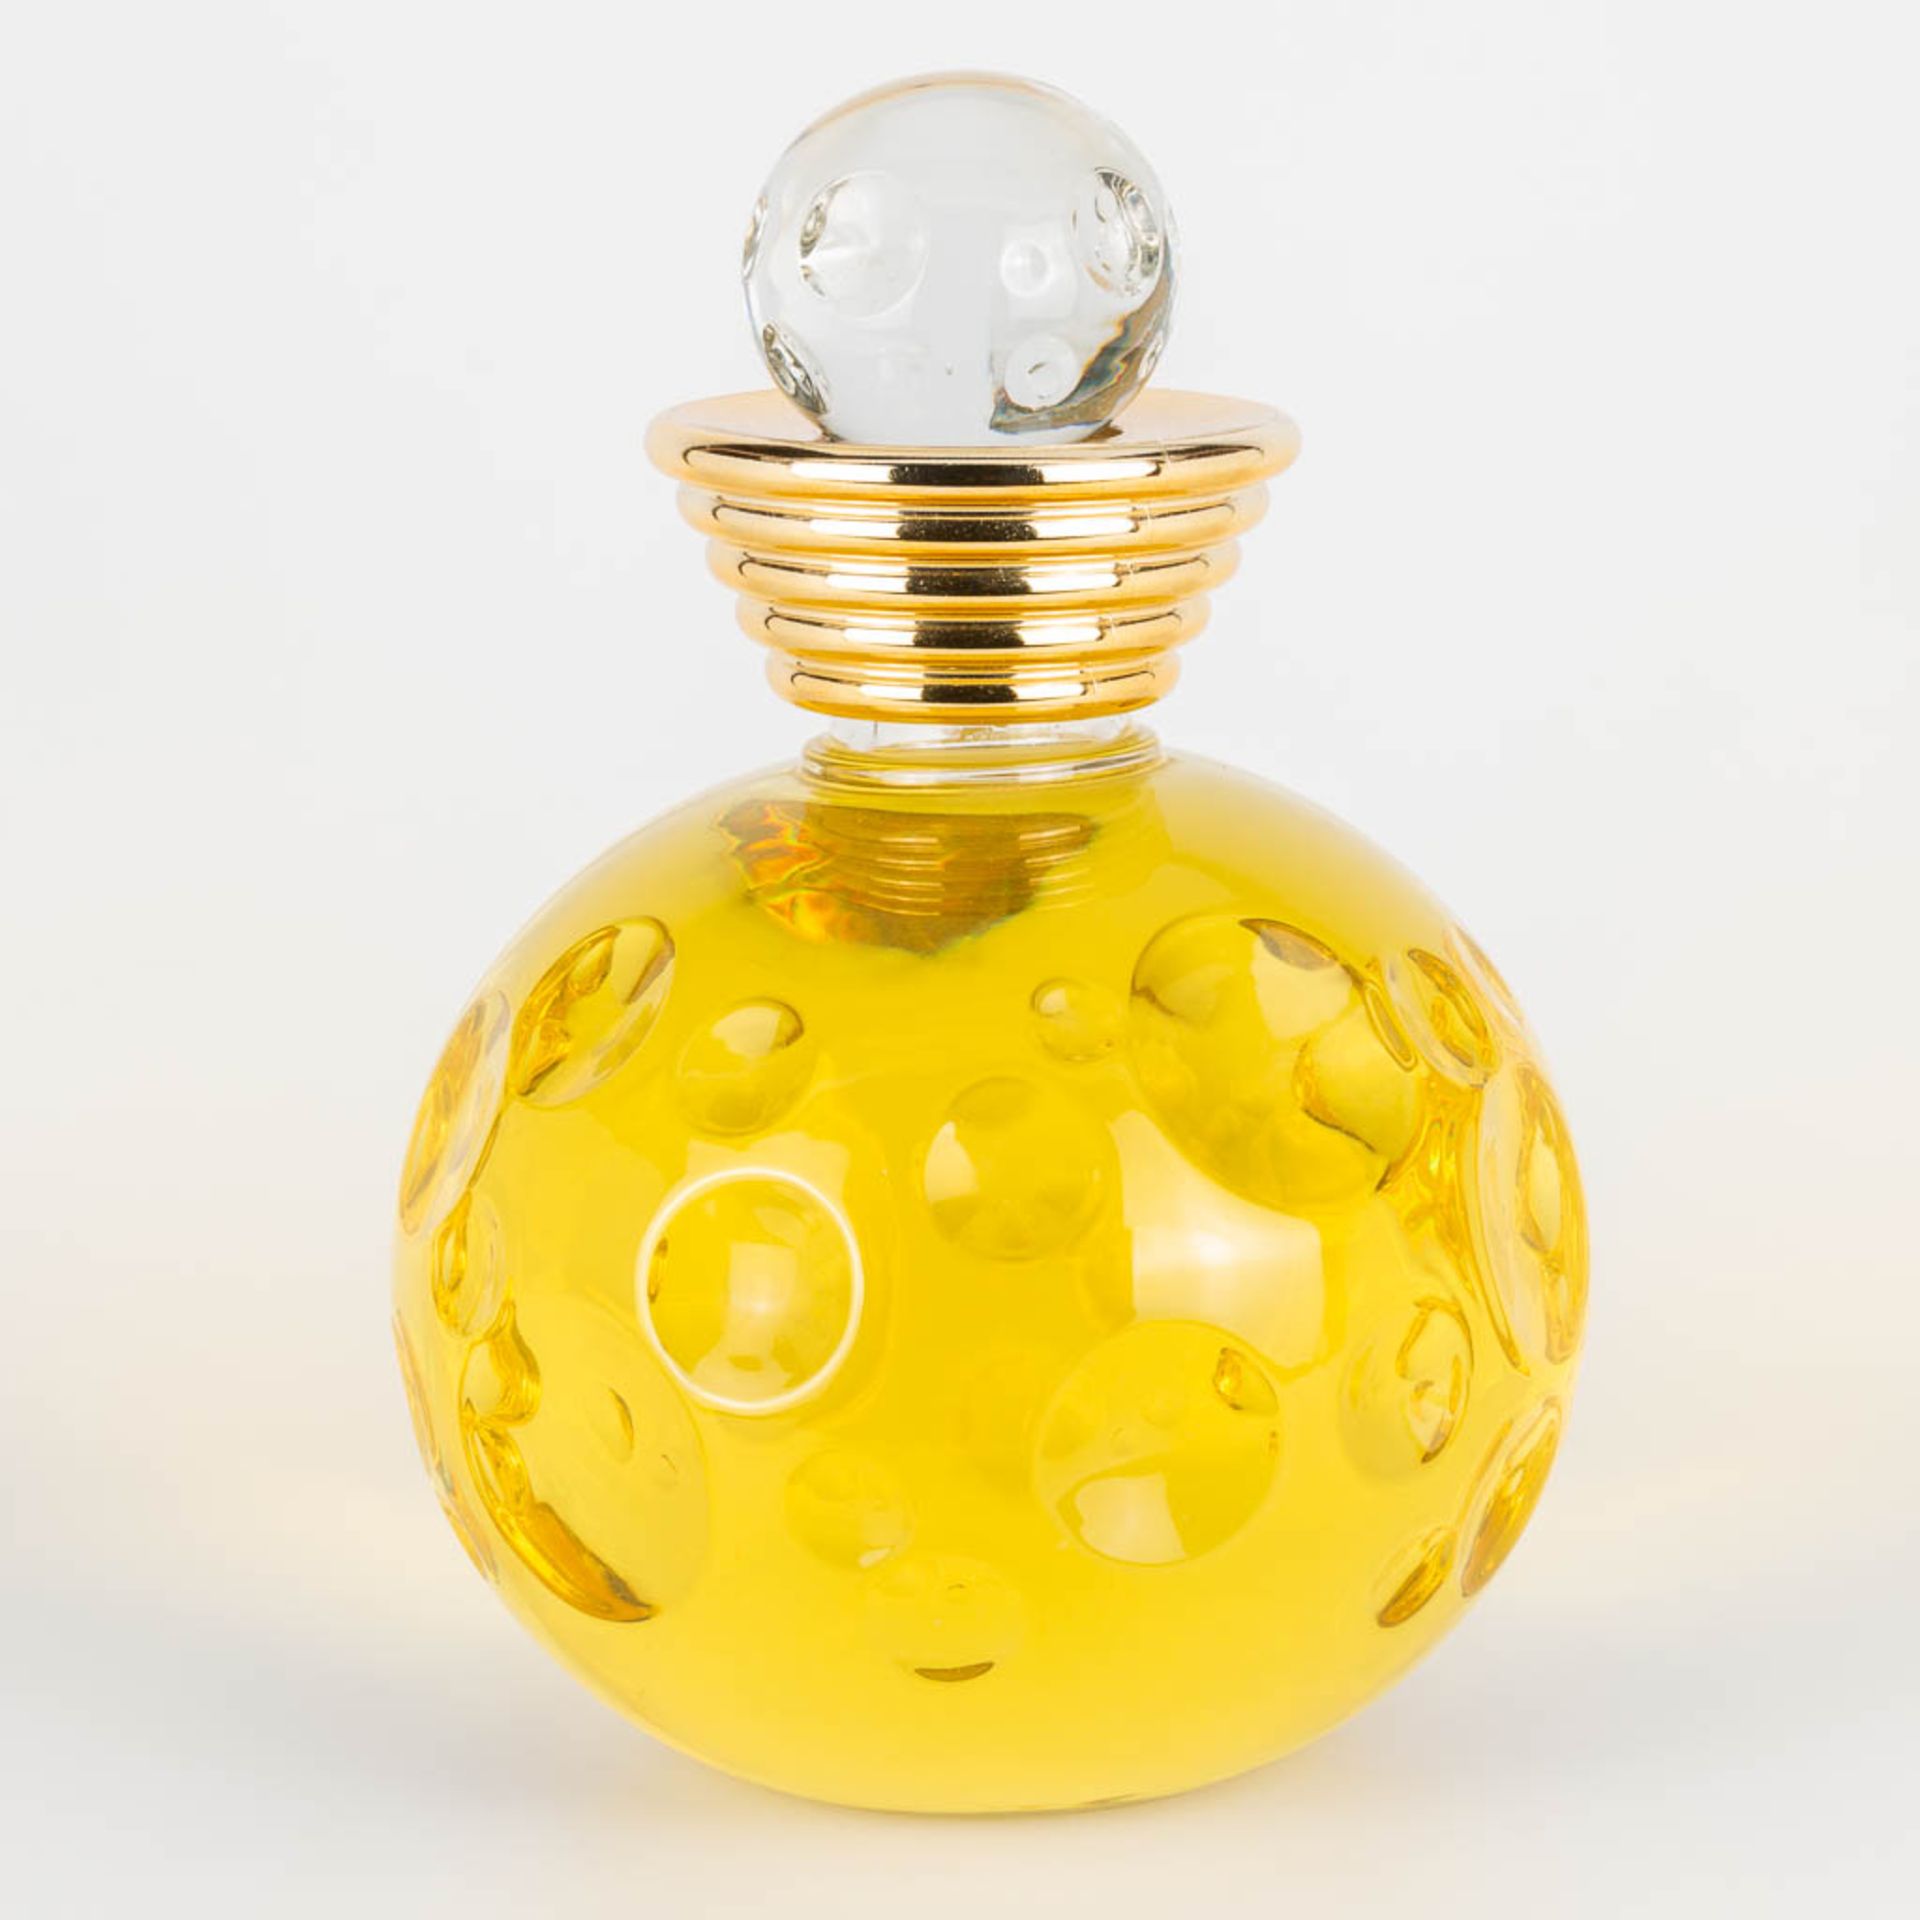 A large Dummy Perfume bottle 'La Dolce Vita' by Christian Dior. (35 x 24 cm) - Bild 3 aus 9